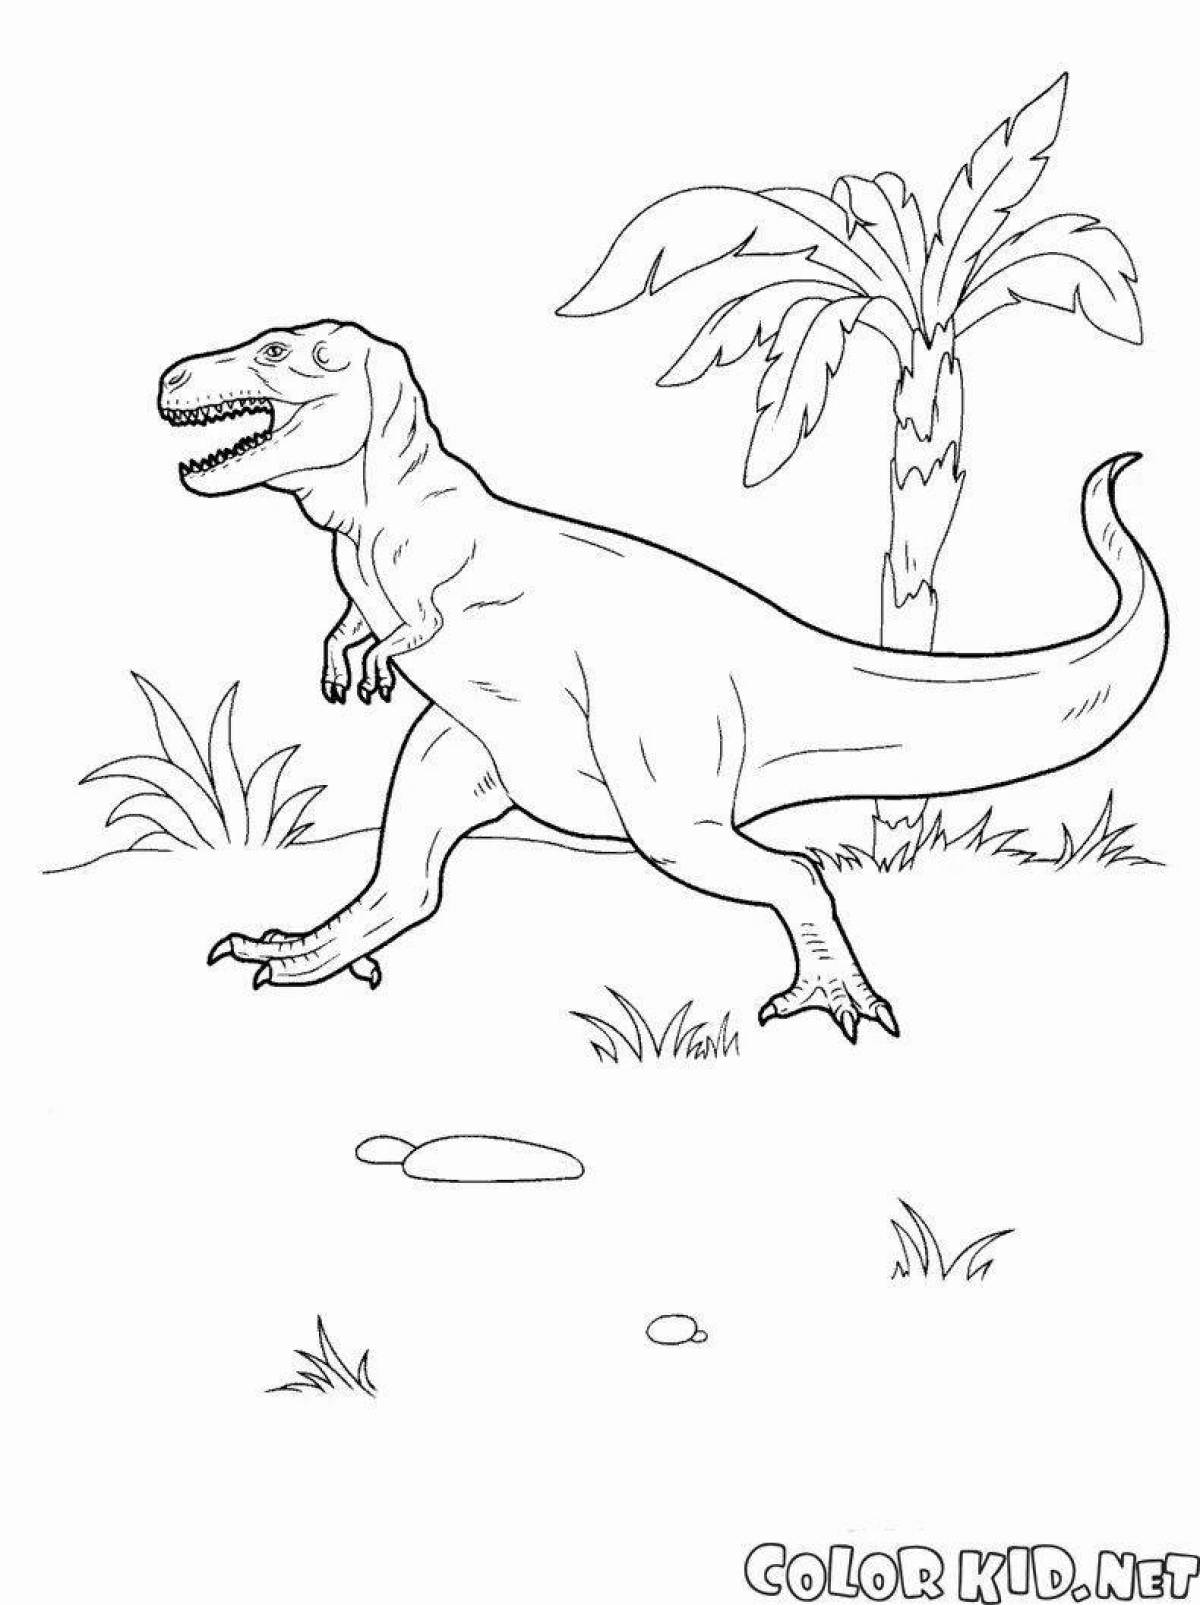 Tyrannosaurus rex seal coloring page